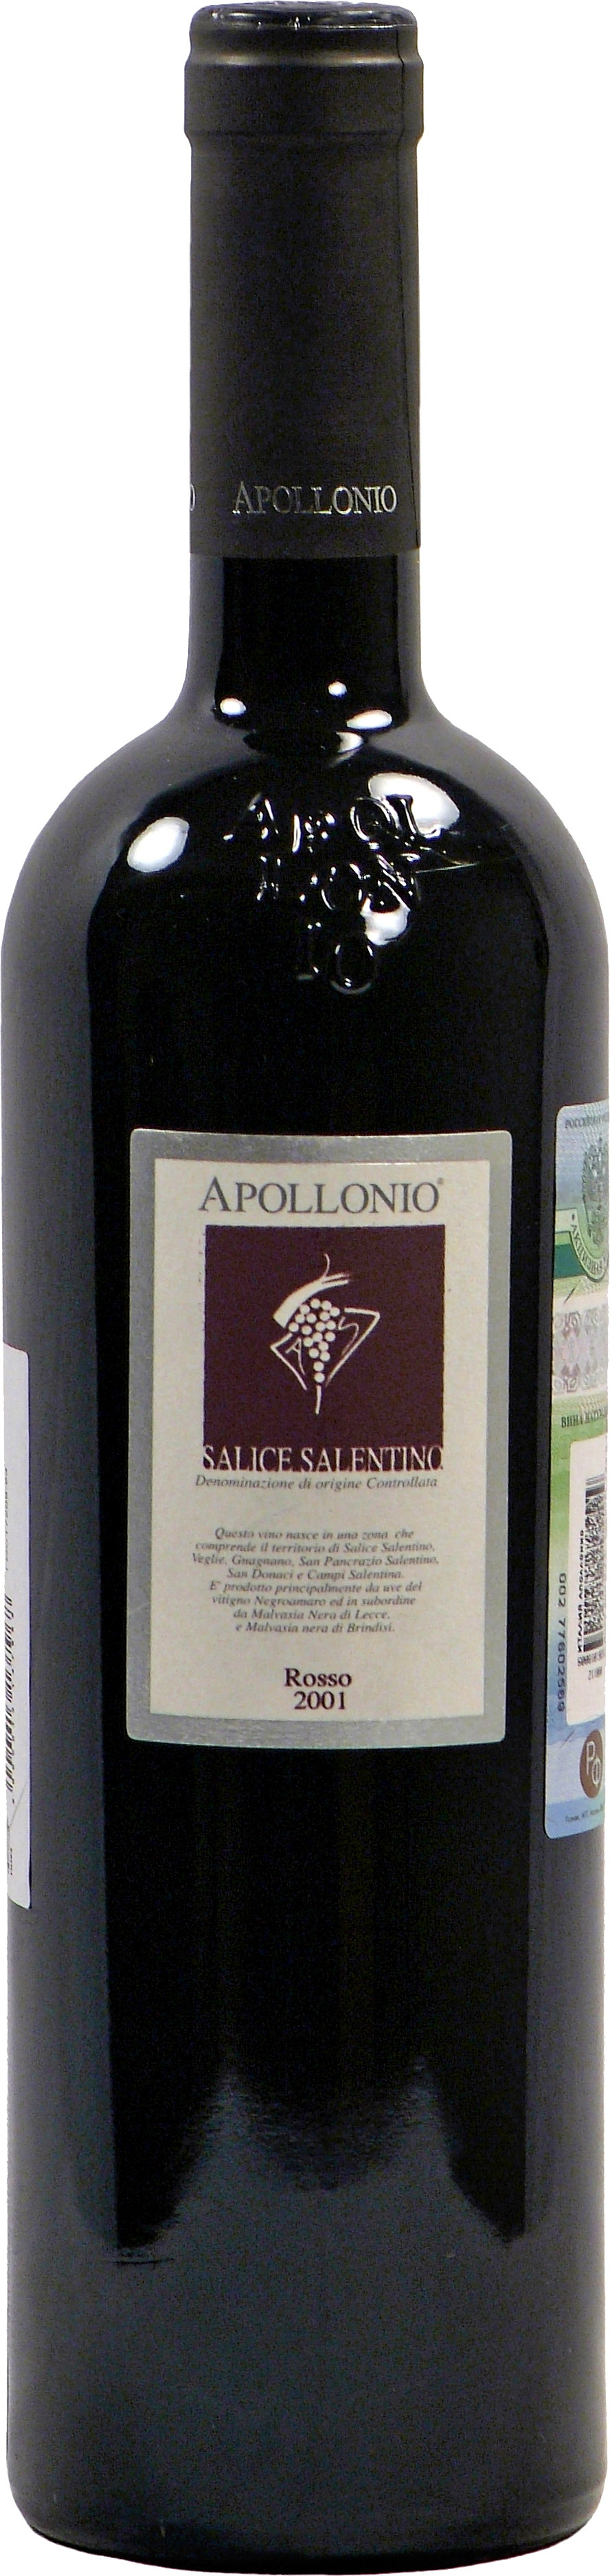 Аполлонио Саличе Салентино 2004 DOC - 0,75 л